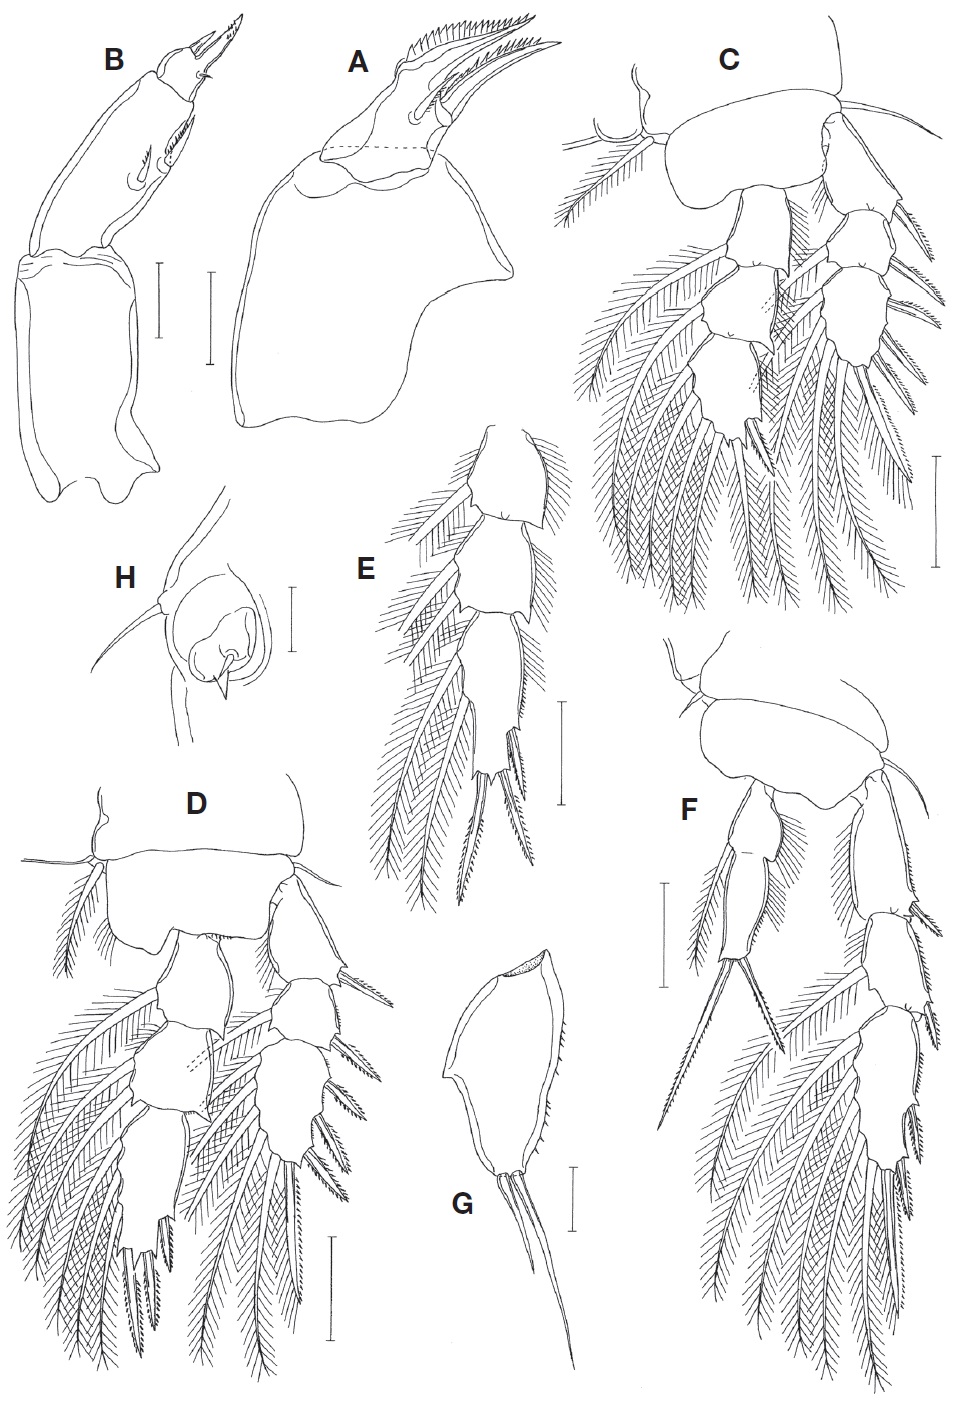 Telestacicola turgipes n. sp., female. A, Maxilla; B, Maxilliped; C, Leg 1; D, Leg 2; E, Leg 3 endopod; F, Leg 4; G, Leg 5 exopod; H, Left genital aperture. Scale bars: A, B, G, H=0.02 mm, C-F=0.05 mm.